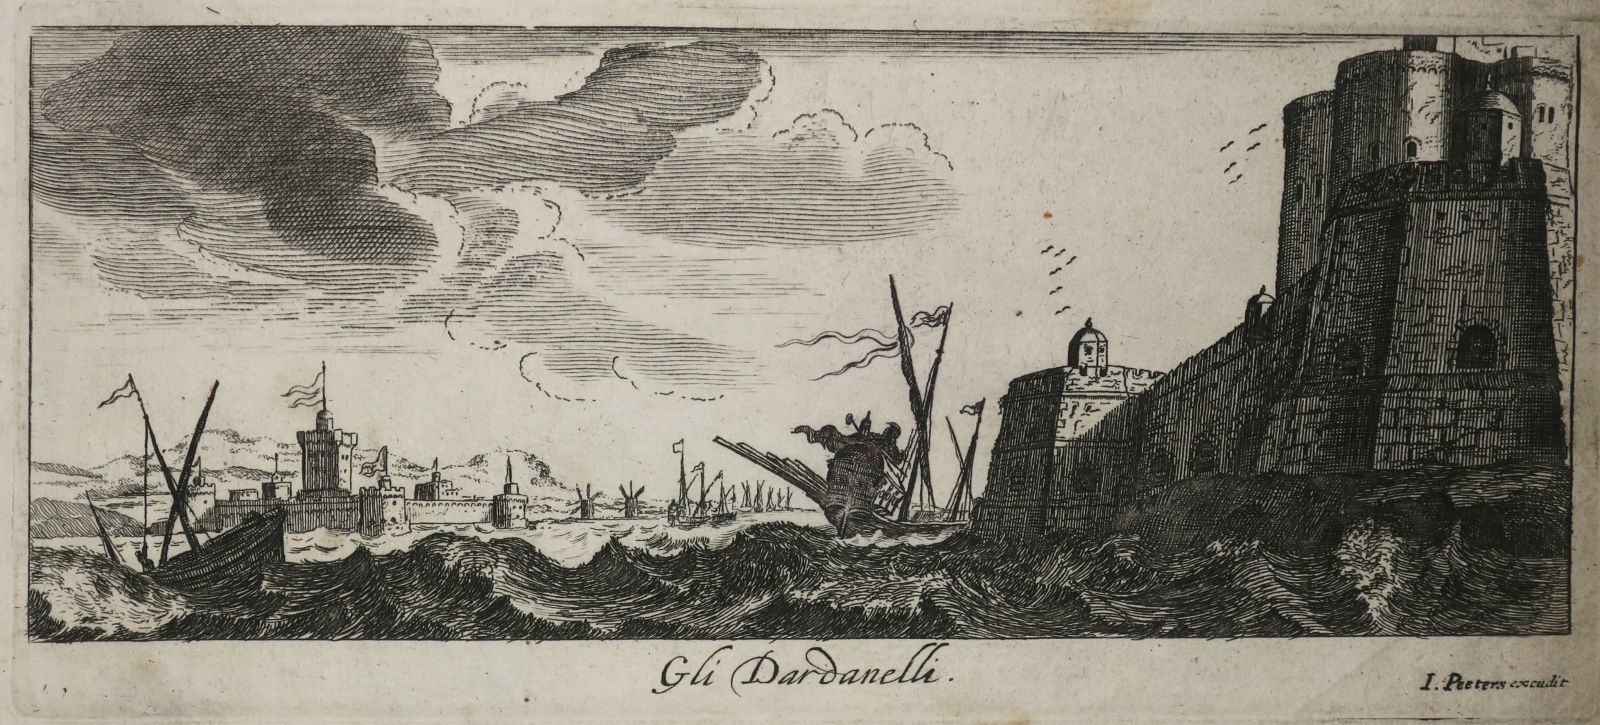 Null 土耳其 - "(DARDANELLES) Gli Dardanelli "的景观。 约1690年。 卢卡斯-沃斯特曼（1595-1675）蚀刻和雕刻。&hellip;